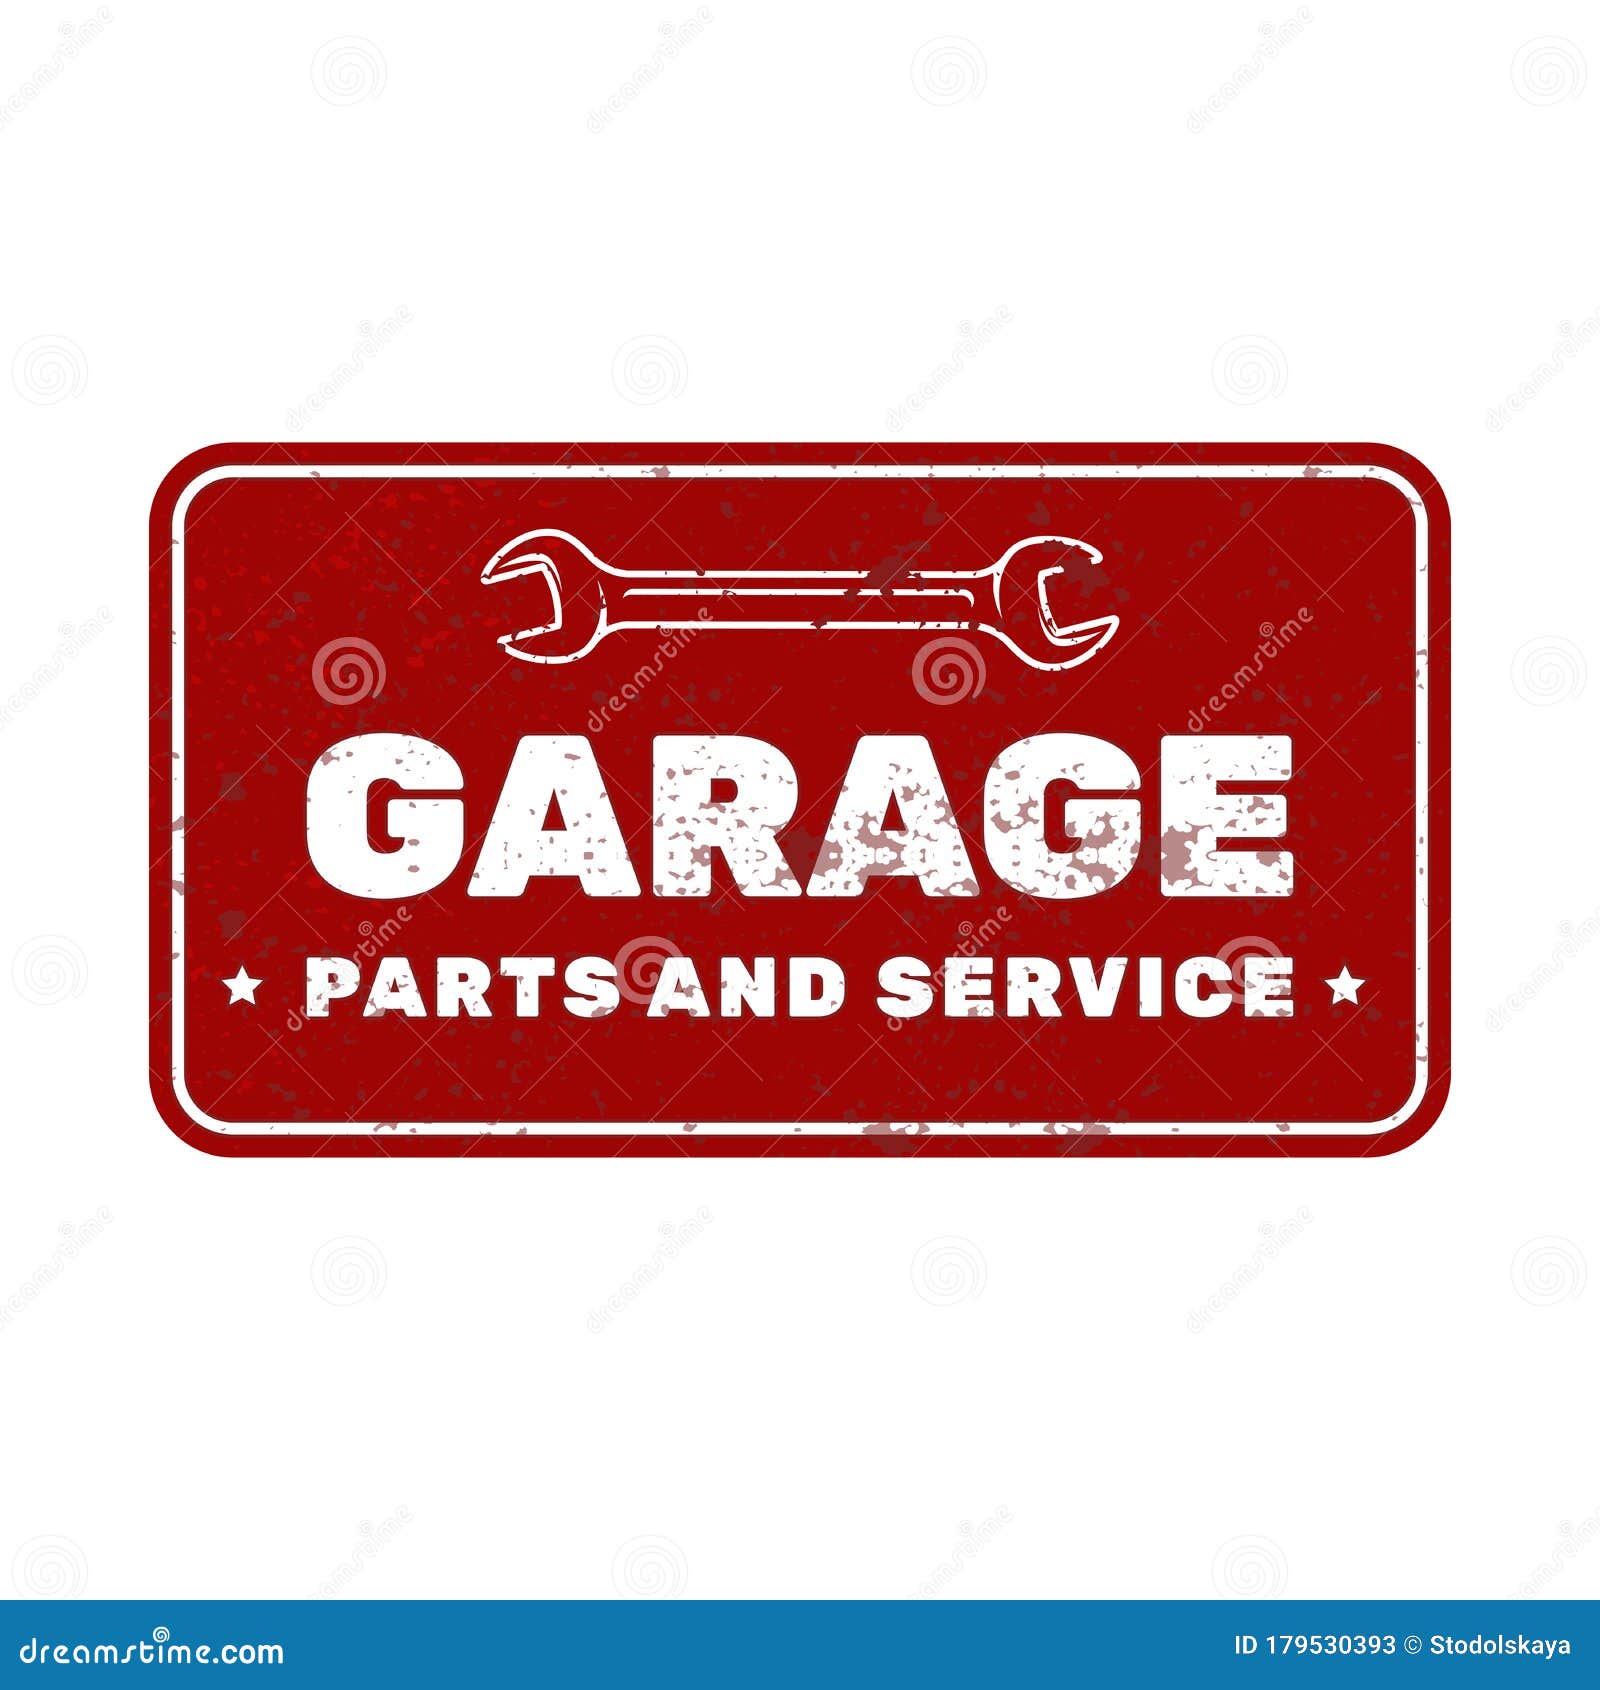 BANPN00187 Audi RS Cars Workshop Garage PVC Banner Printing Advertising Signs 